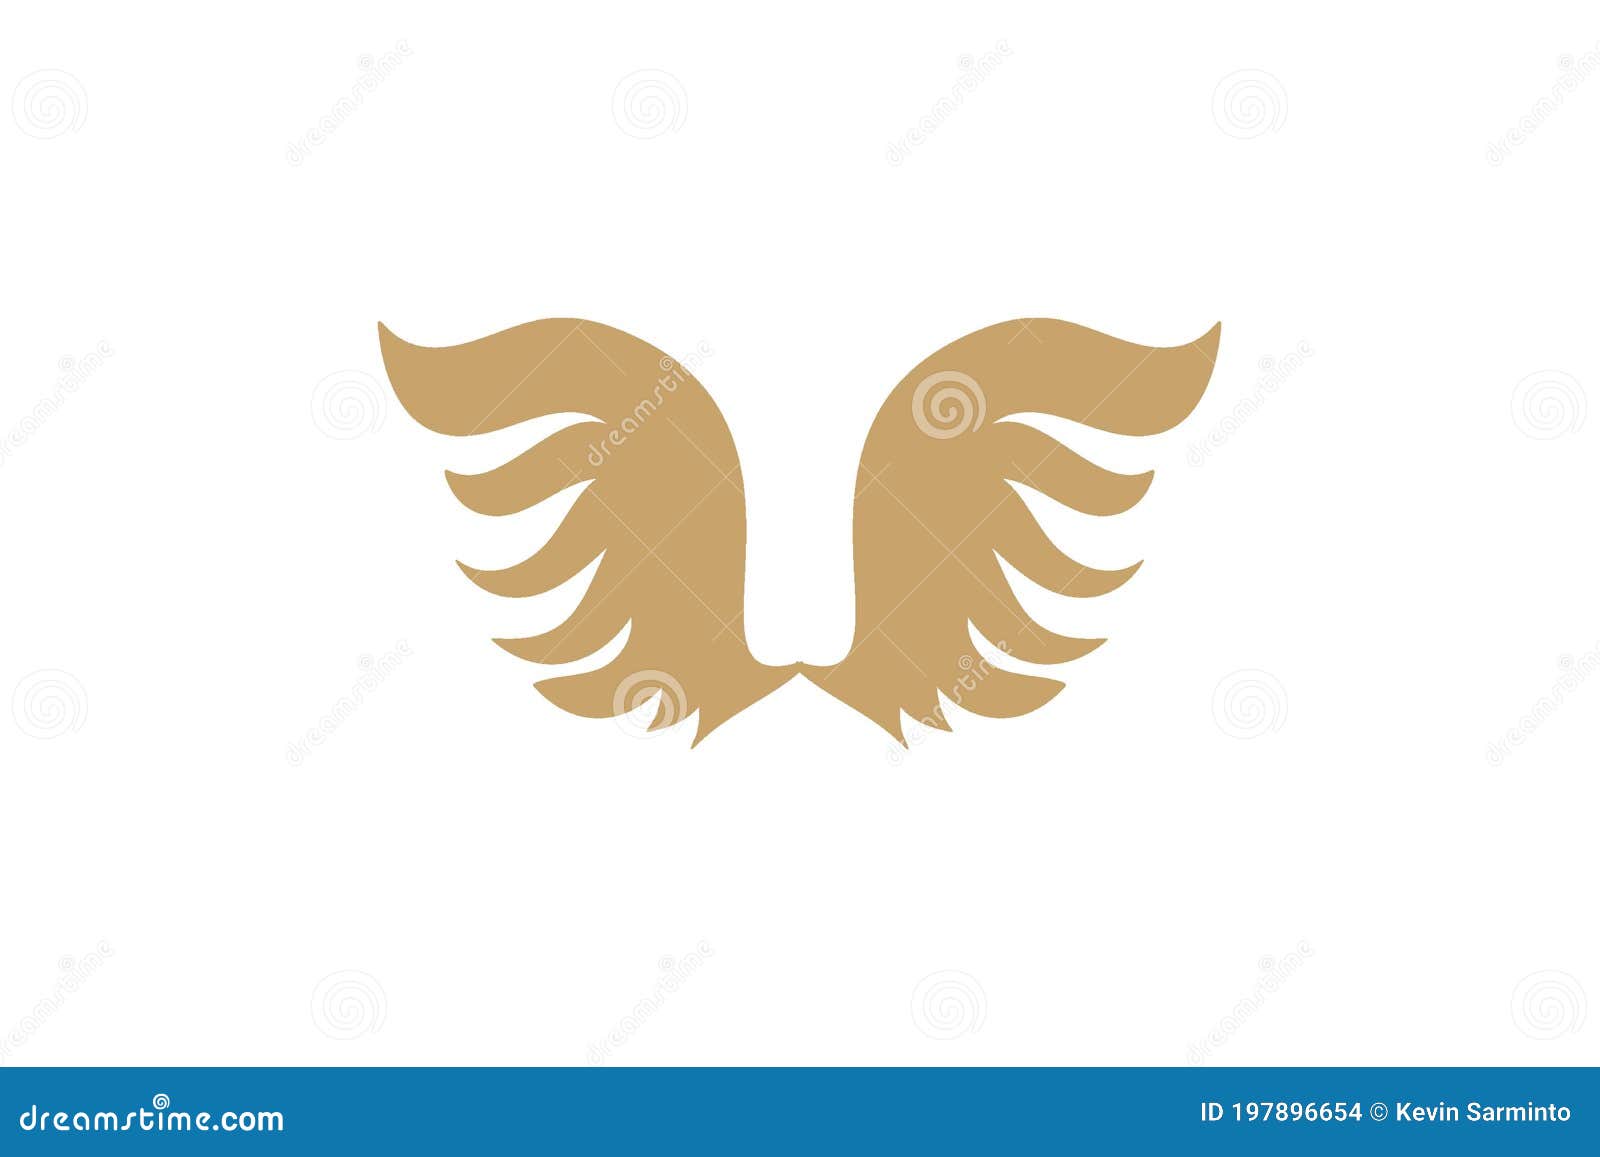 Wings Logo Design Inspiration Stock Vector - Illustration of flat ...